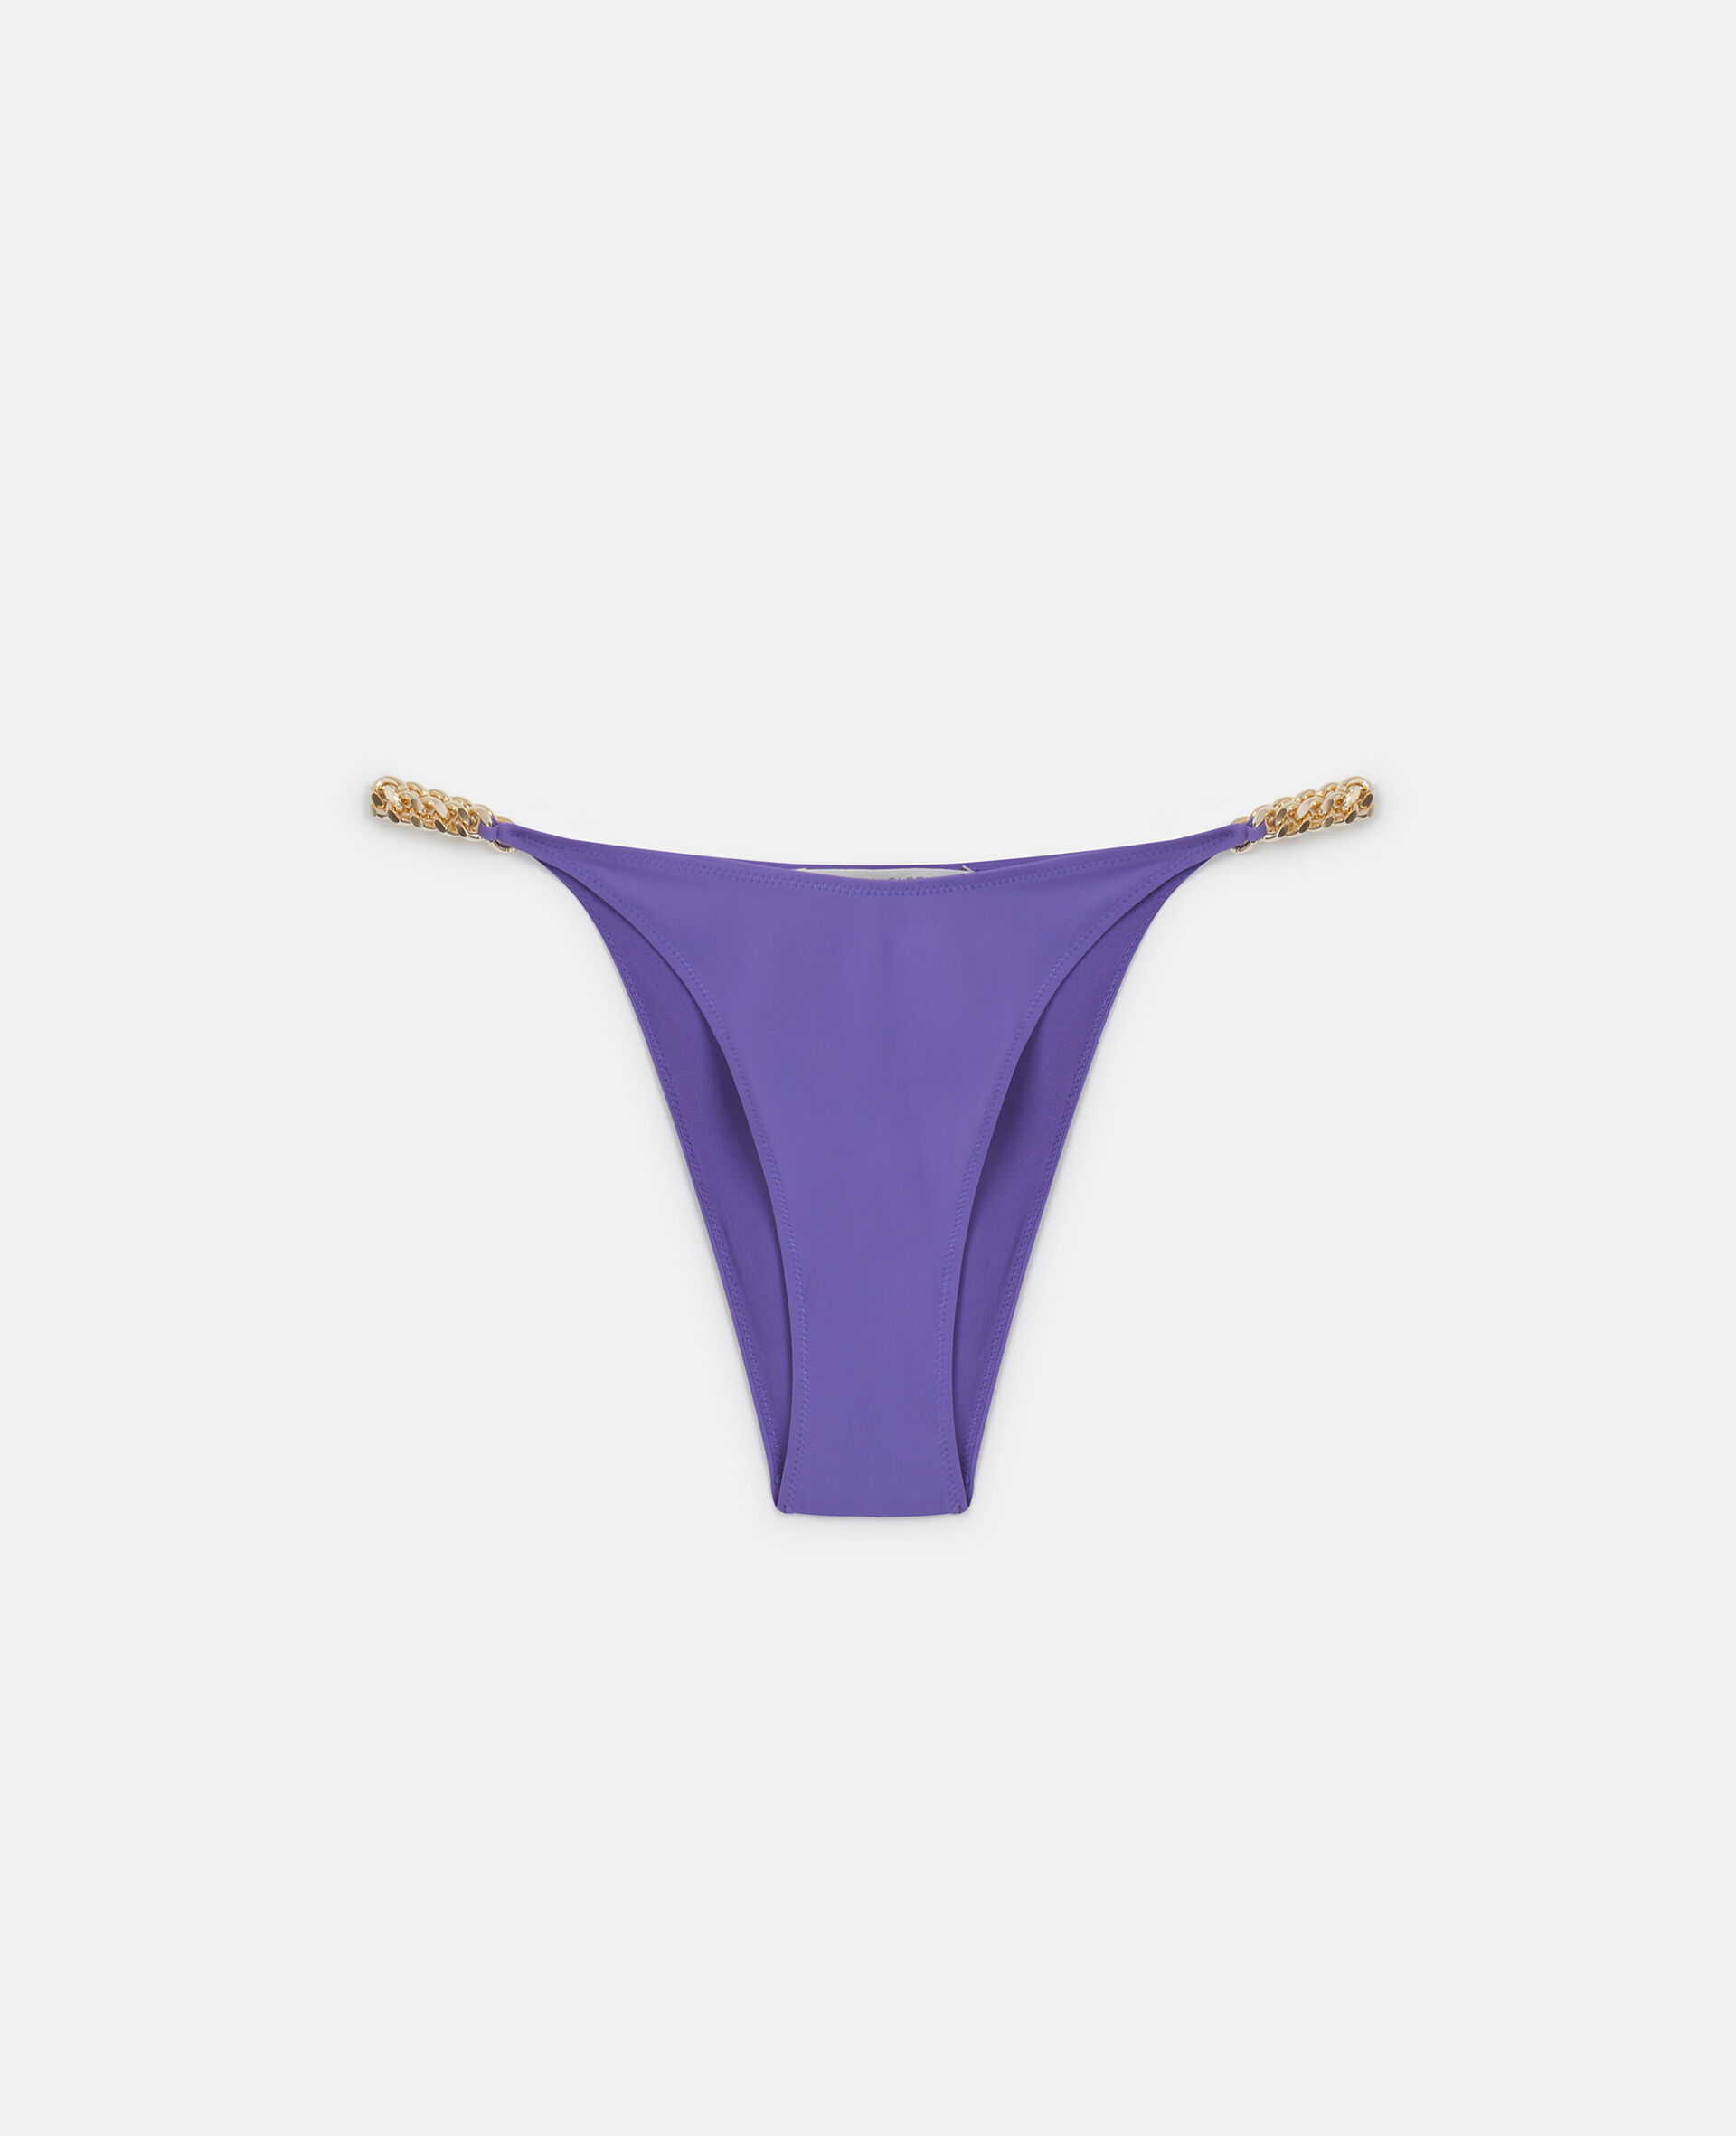 Bas de bikini echancre Falabella-Purple-medium